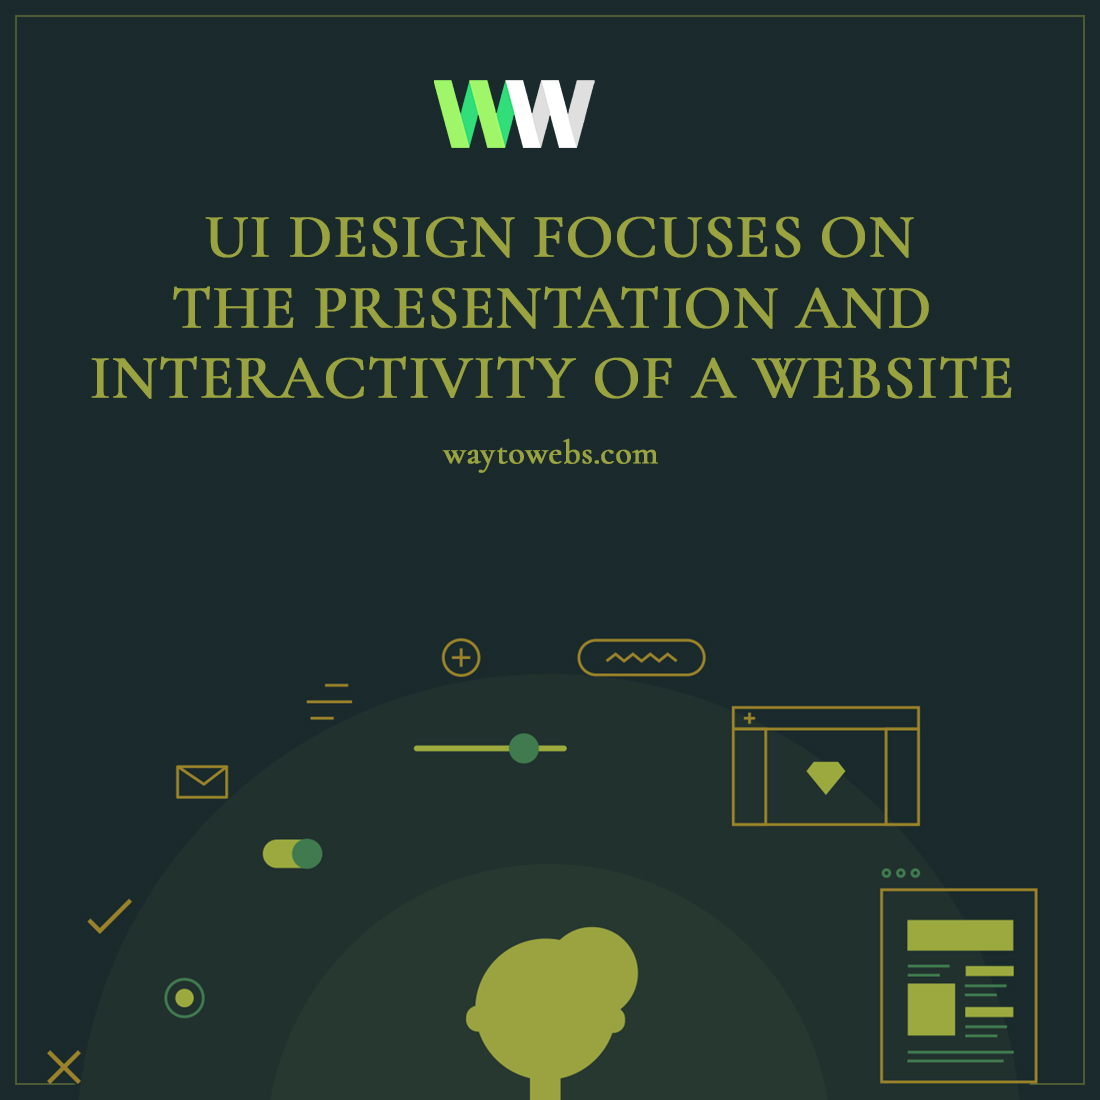 #UIDesign #UserInterface #UIUX #DesignInspiration #WebDesign #MobileDesign #DigitalDesign #GraphicDesign #VisualDesign #InteractionDesign #CreativeDesign #DesignThinking #MinimalUI #ResponsiveDesign #UIAnimation #UIPrototyping #Waytowebs
🌐 Visit: waytowebs.com